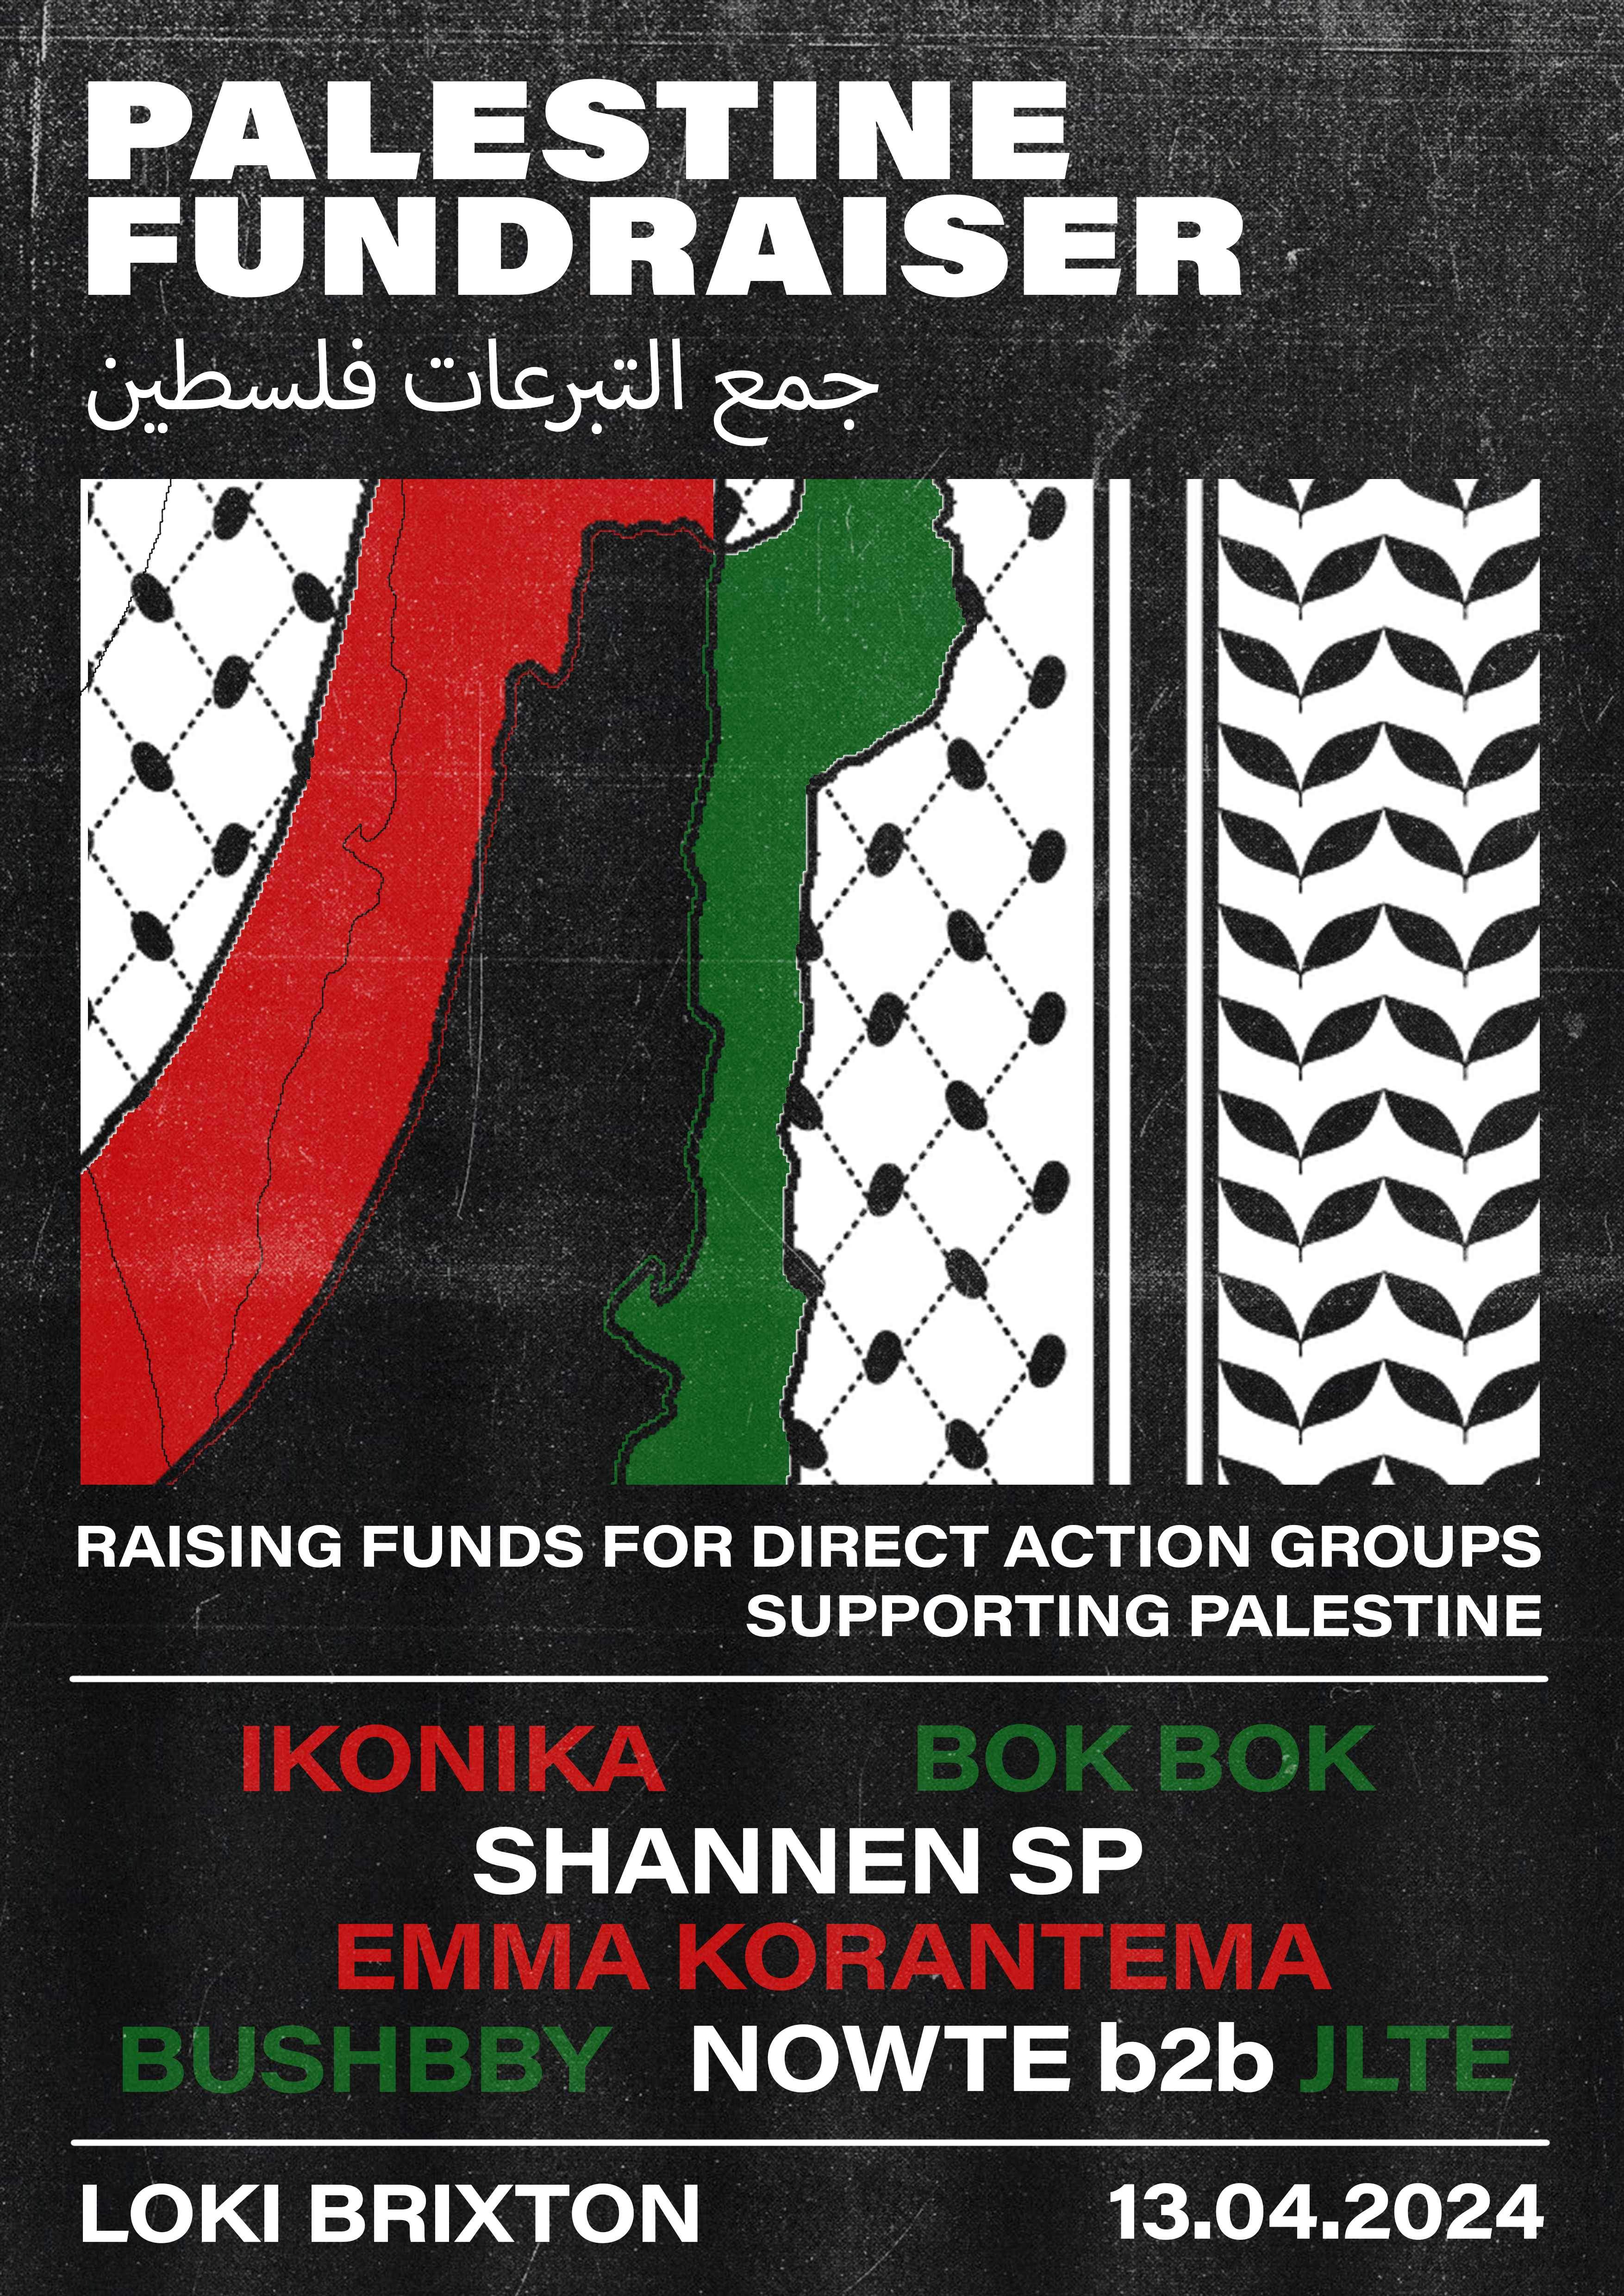 Palestine Fundraiser: Ikonika, Bok Bok, Shannen SP, Bushbby - フライヤー表